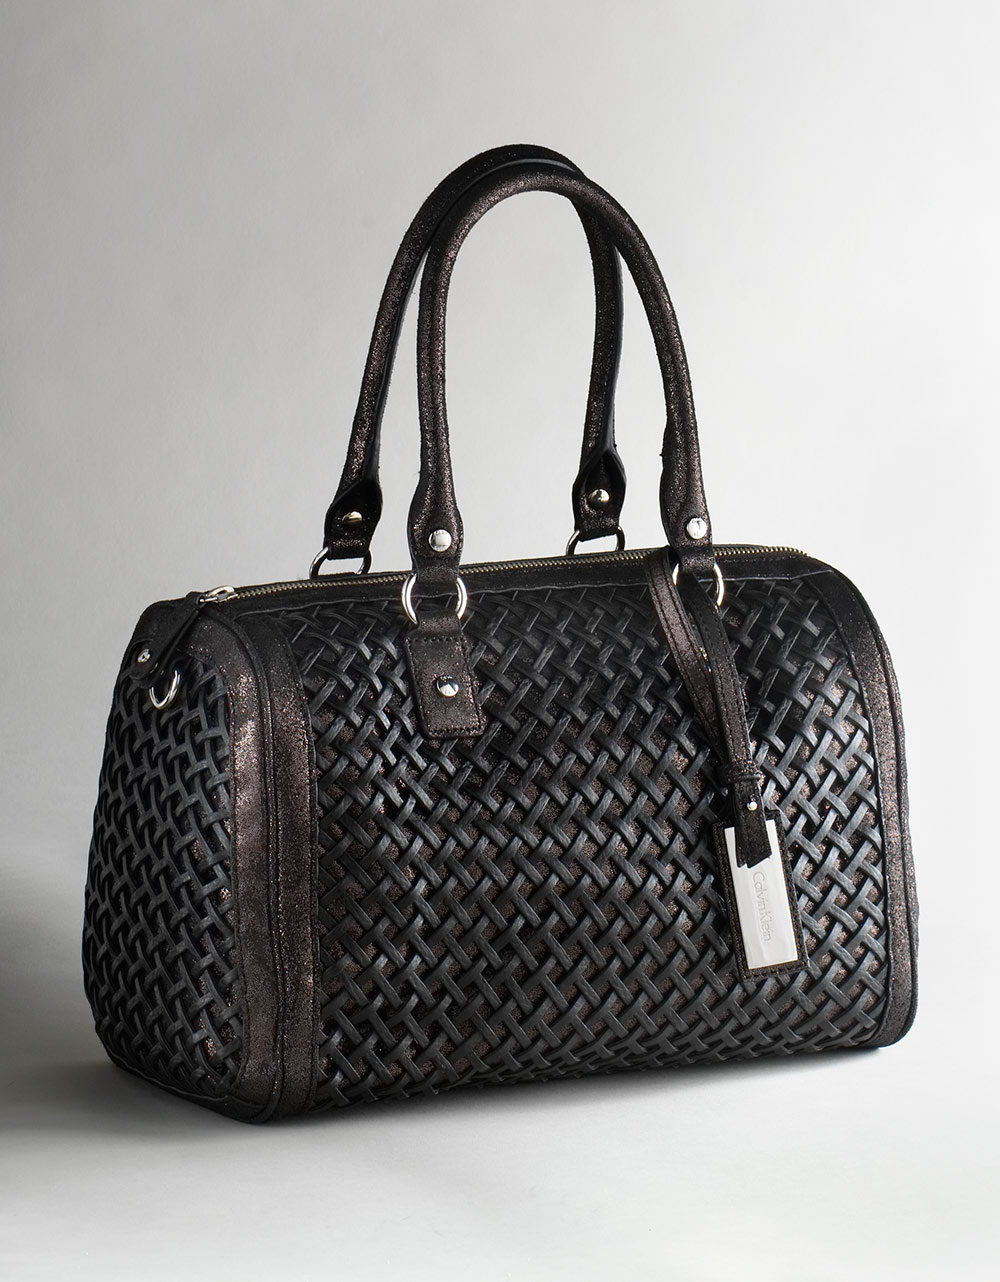 Calvin Klein Woven Leather Satchel Bag in Black | Lyst